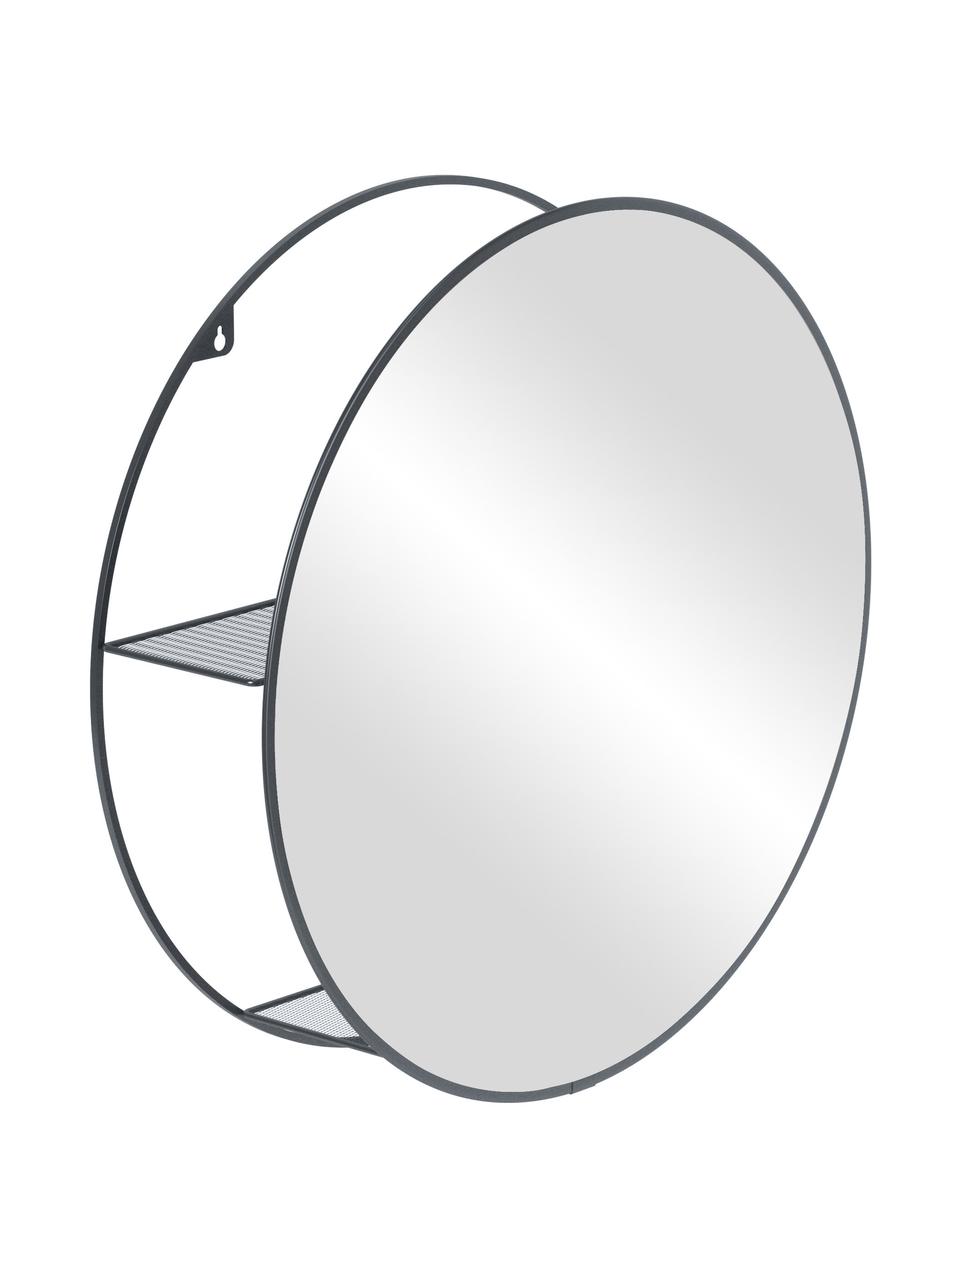 Okrągłe lustro ścienne z półkami Cirko, Czarny, Ø 51 cm